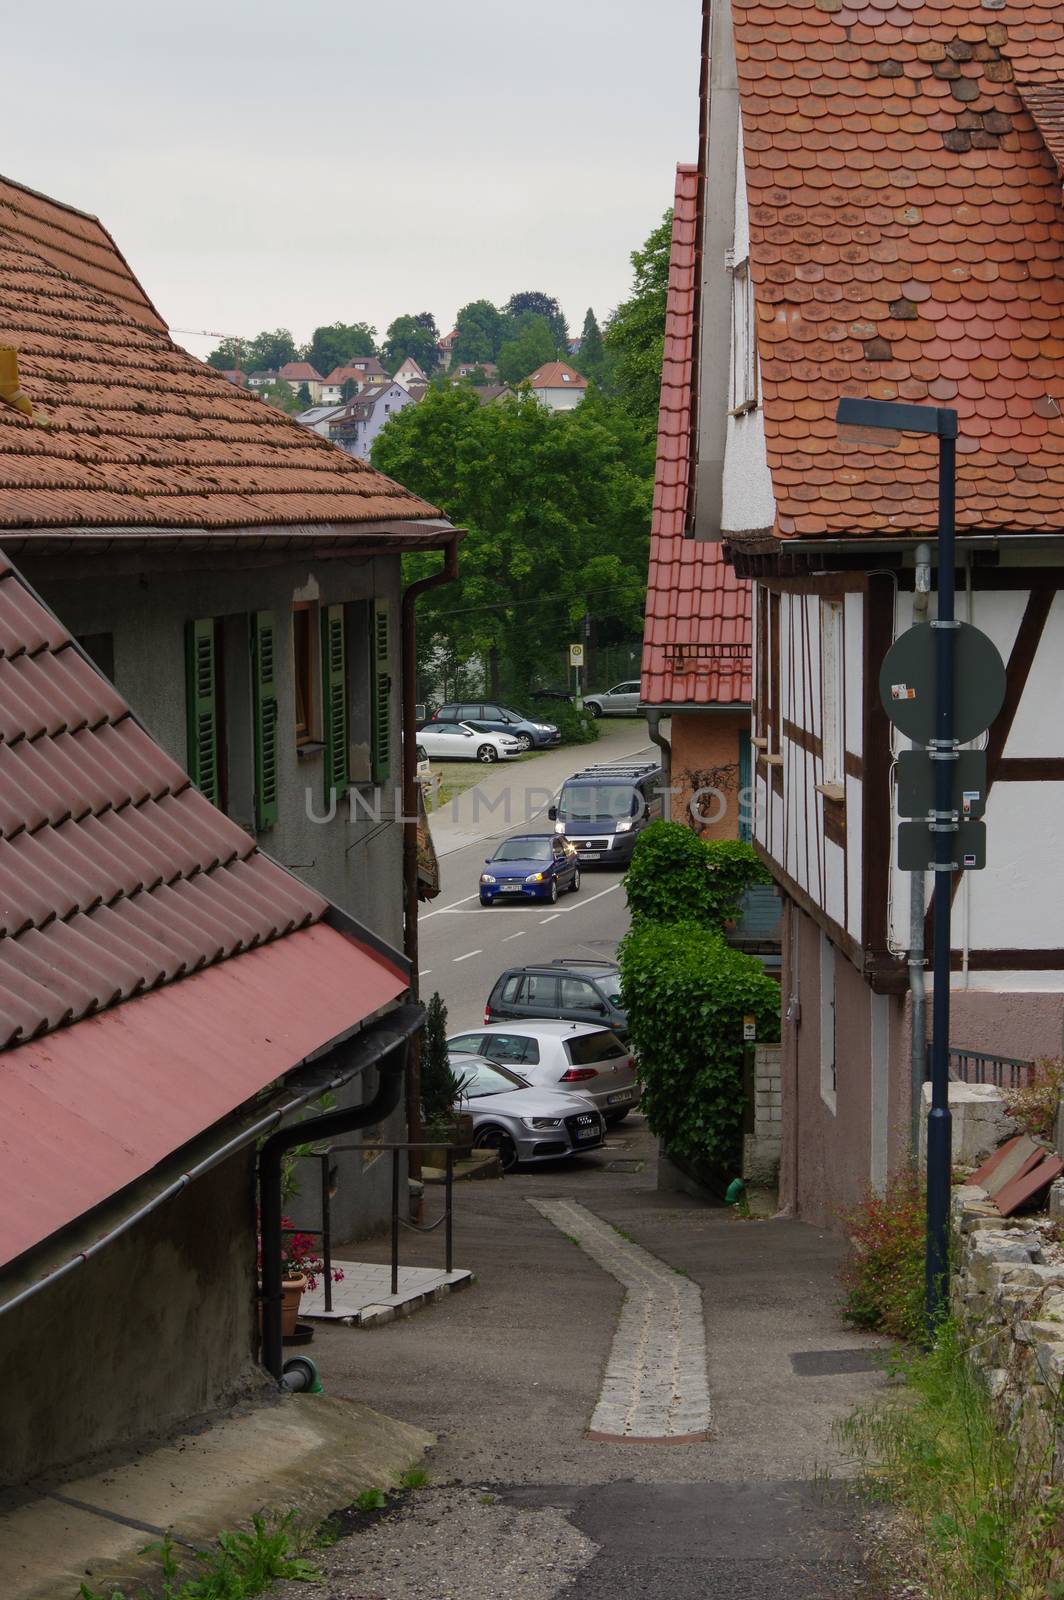 MOENSHEIM, PFORZHEIM, GERMANY - JUNE 10, 2015: Monsheim is a town in the district of Enz in Baden-Wuerttemberg in southern BRD. by evolutionnow